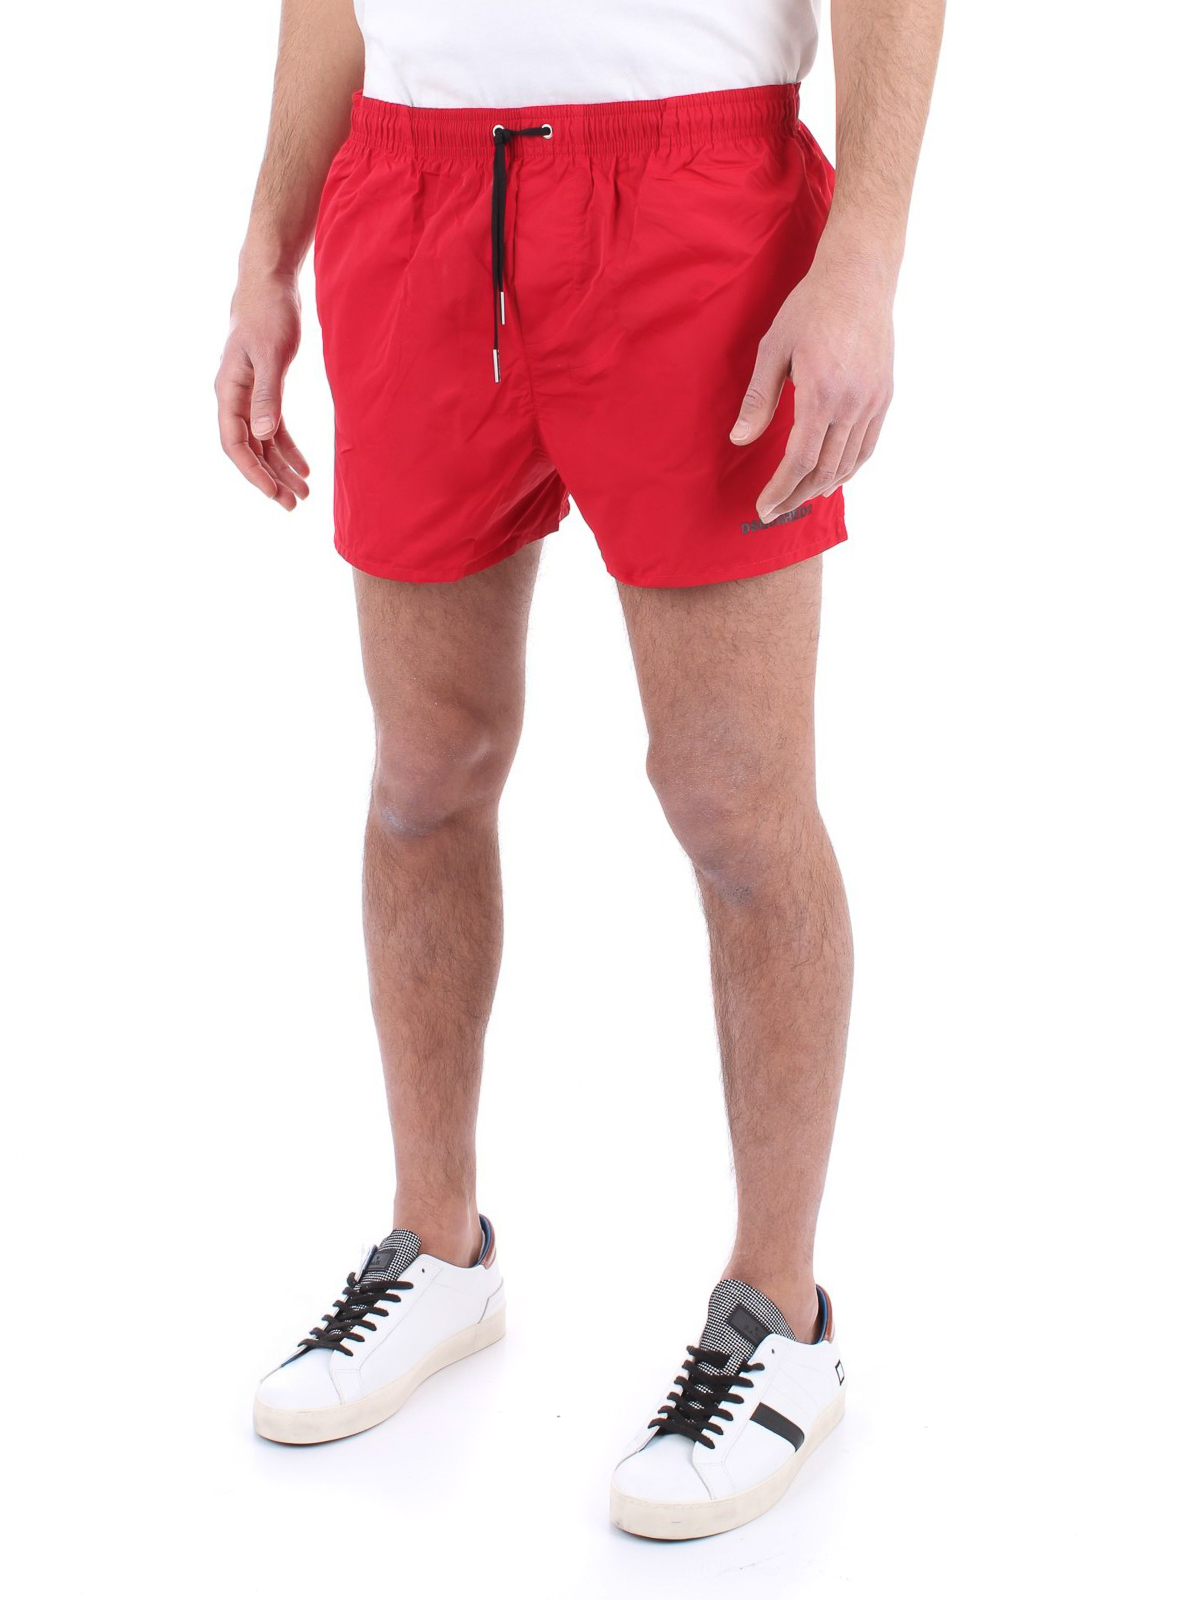 mens swim shorts red